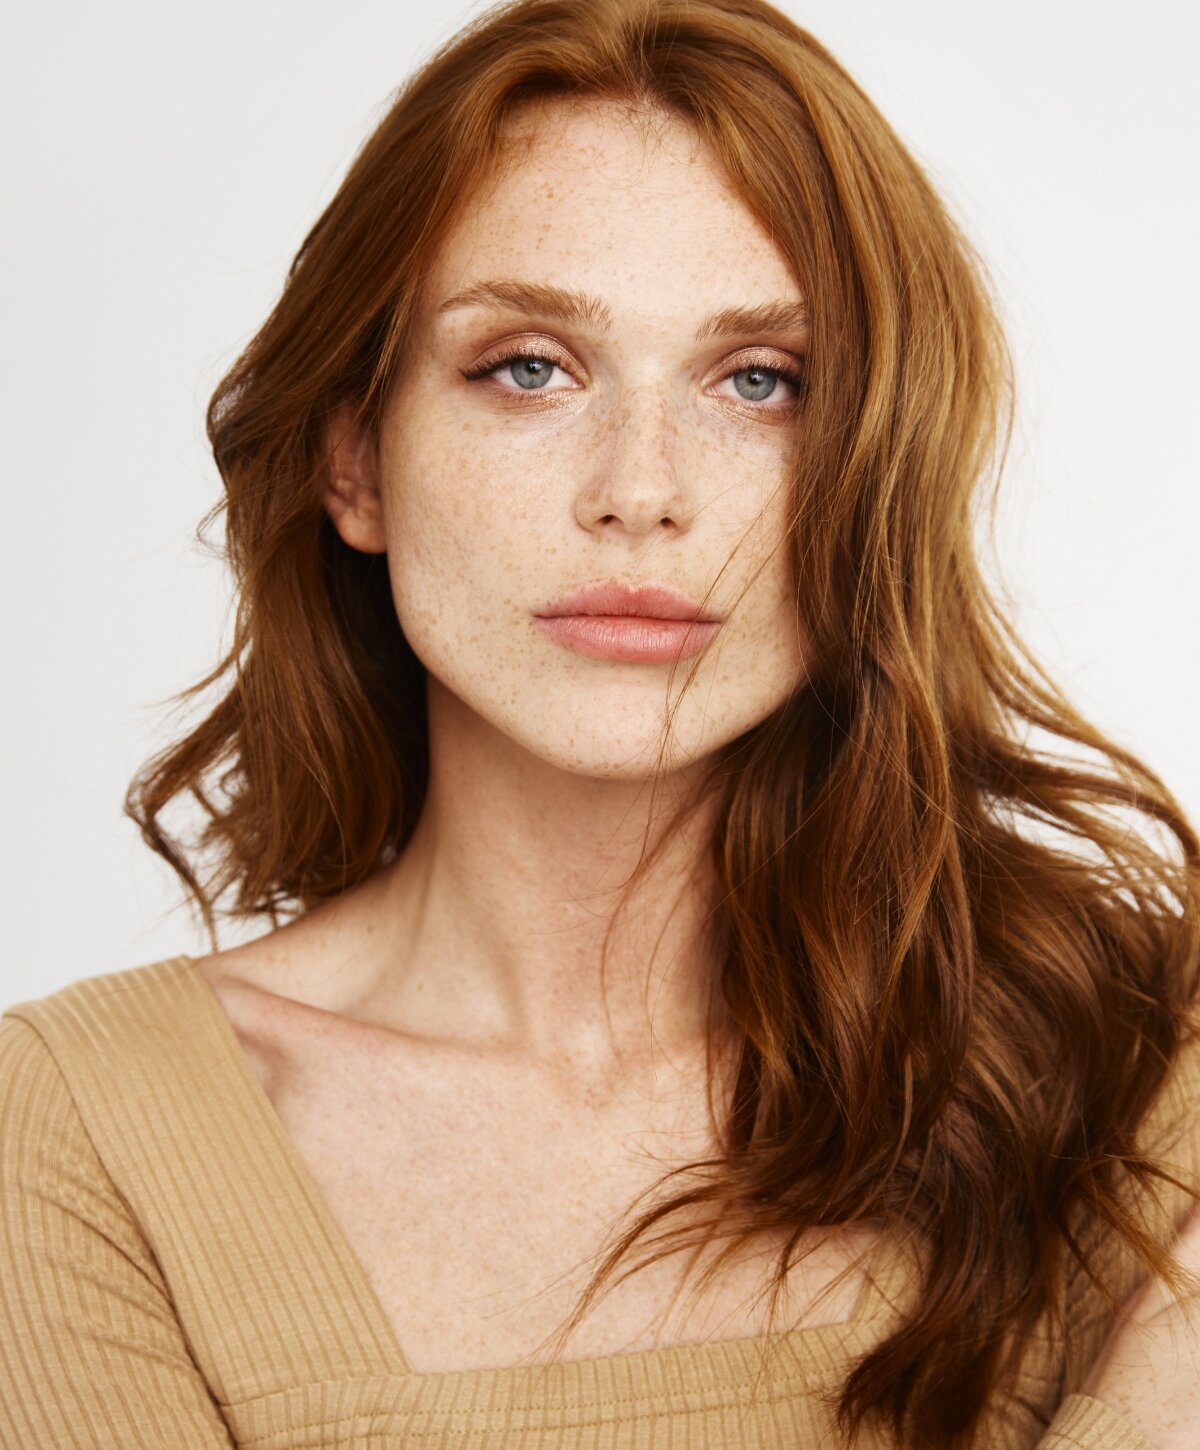 McKinney dermal fillers model with red hair